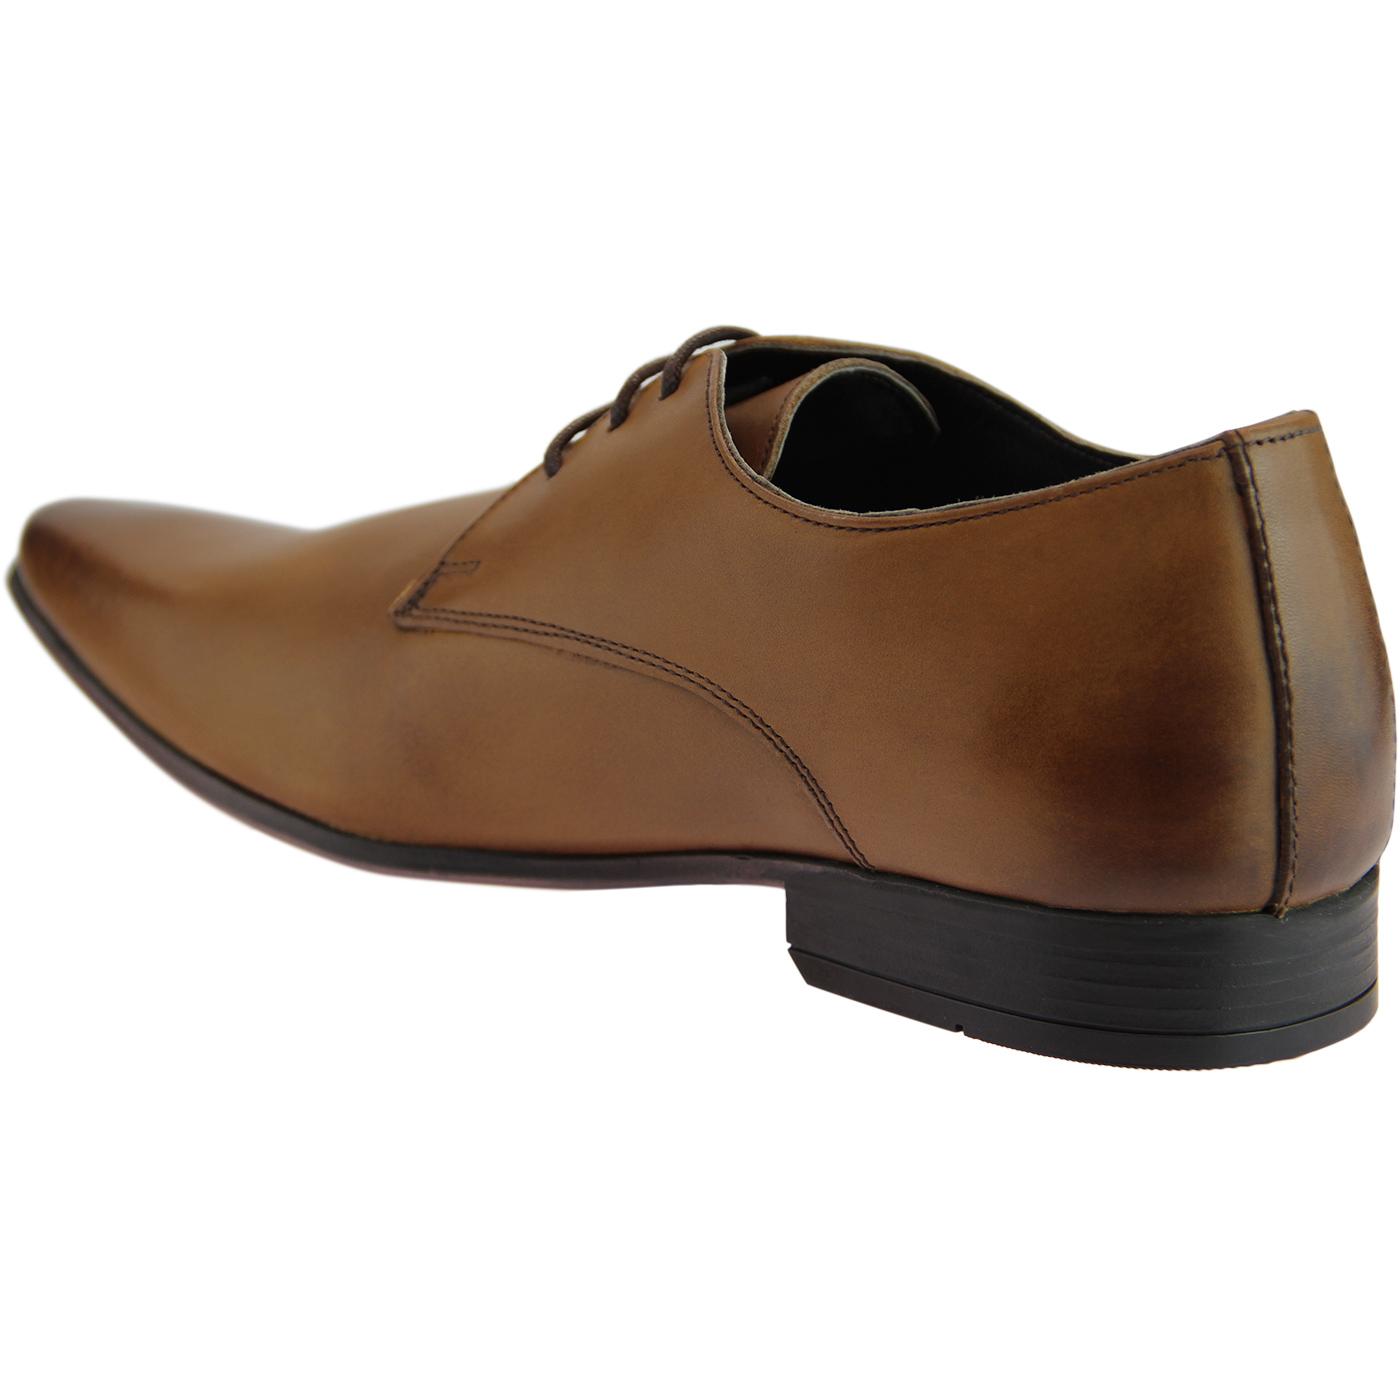 Ikon Drayton Men's Leather Formal Dress Smart Designer Shoes Tan 